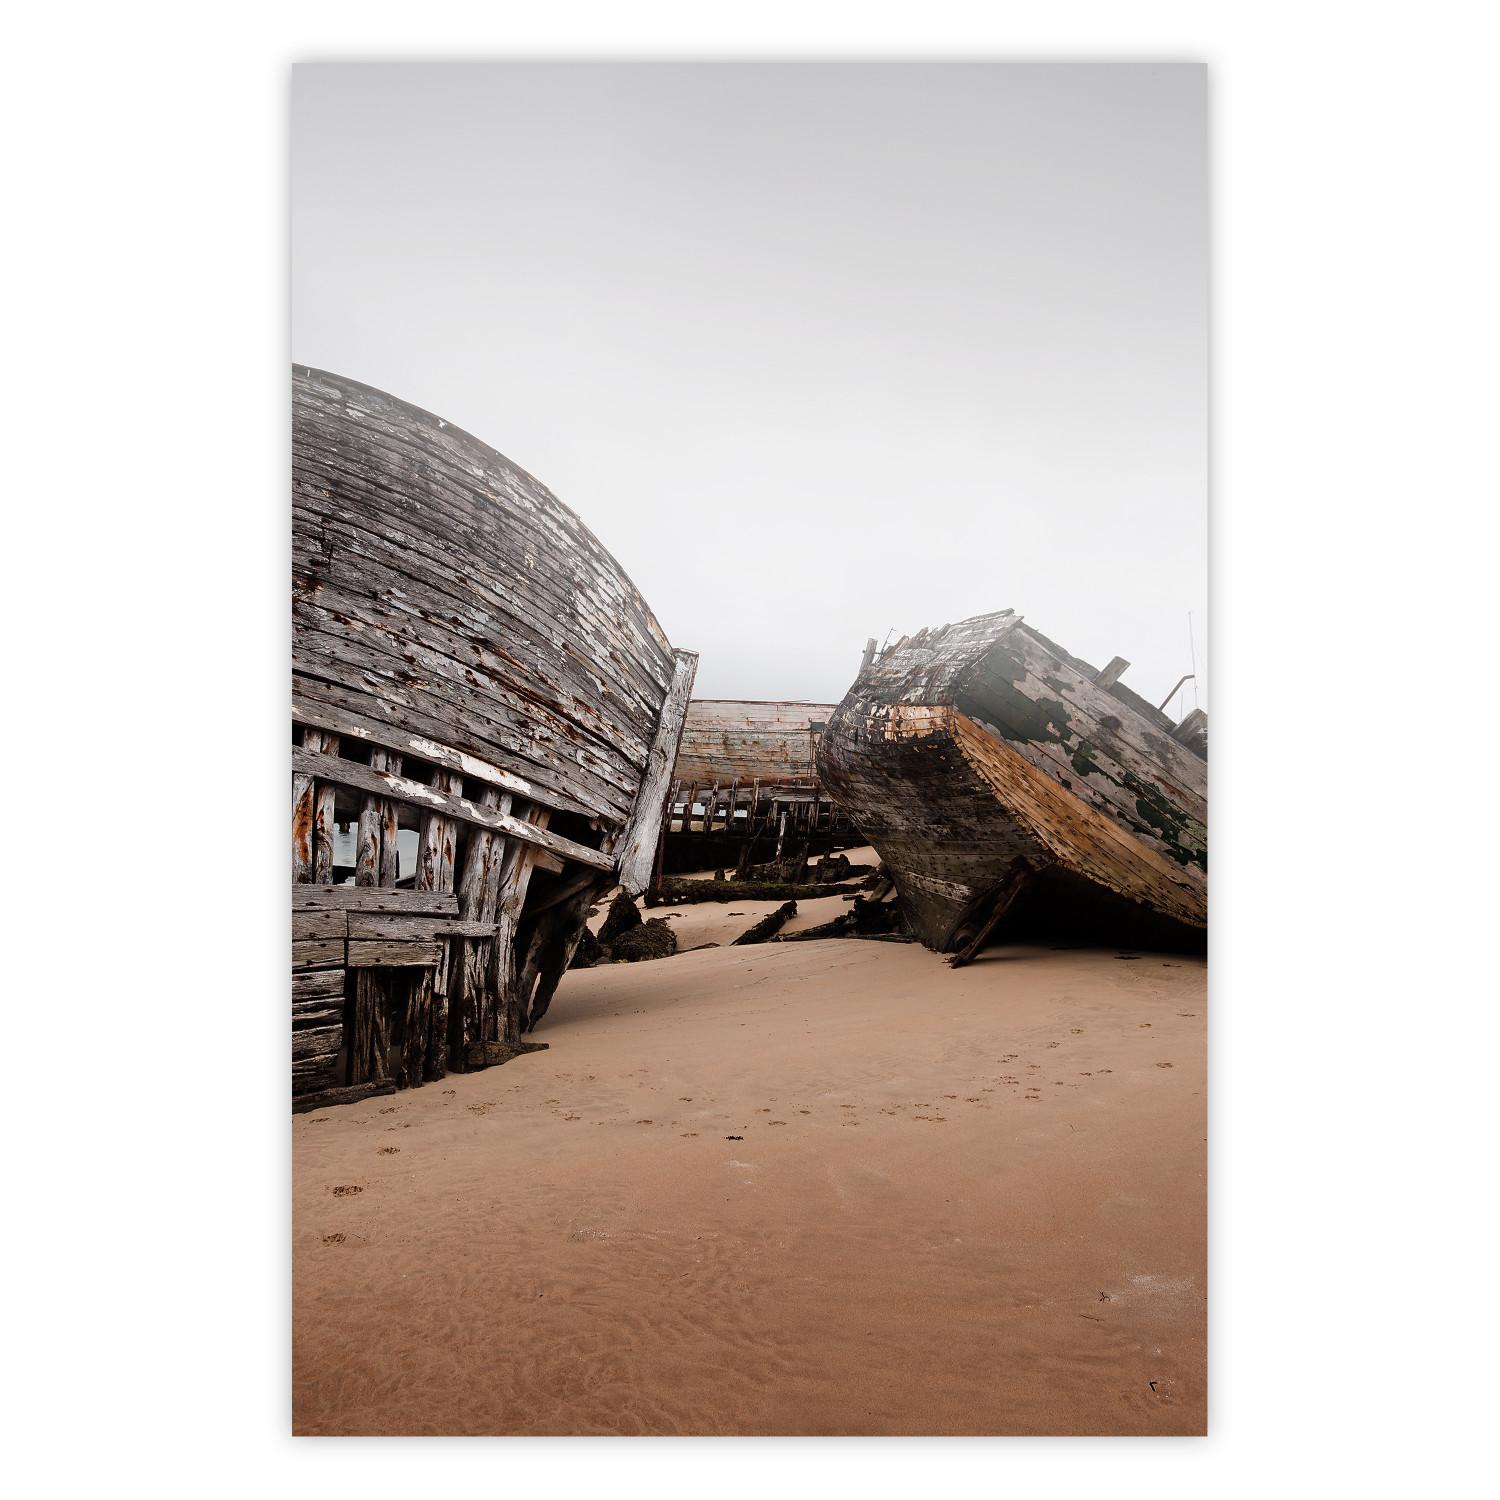 Cartel Barcos abandonados - barco de madera abandonado en playa